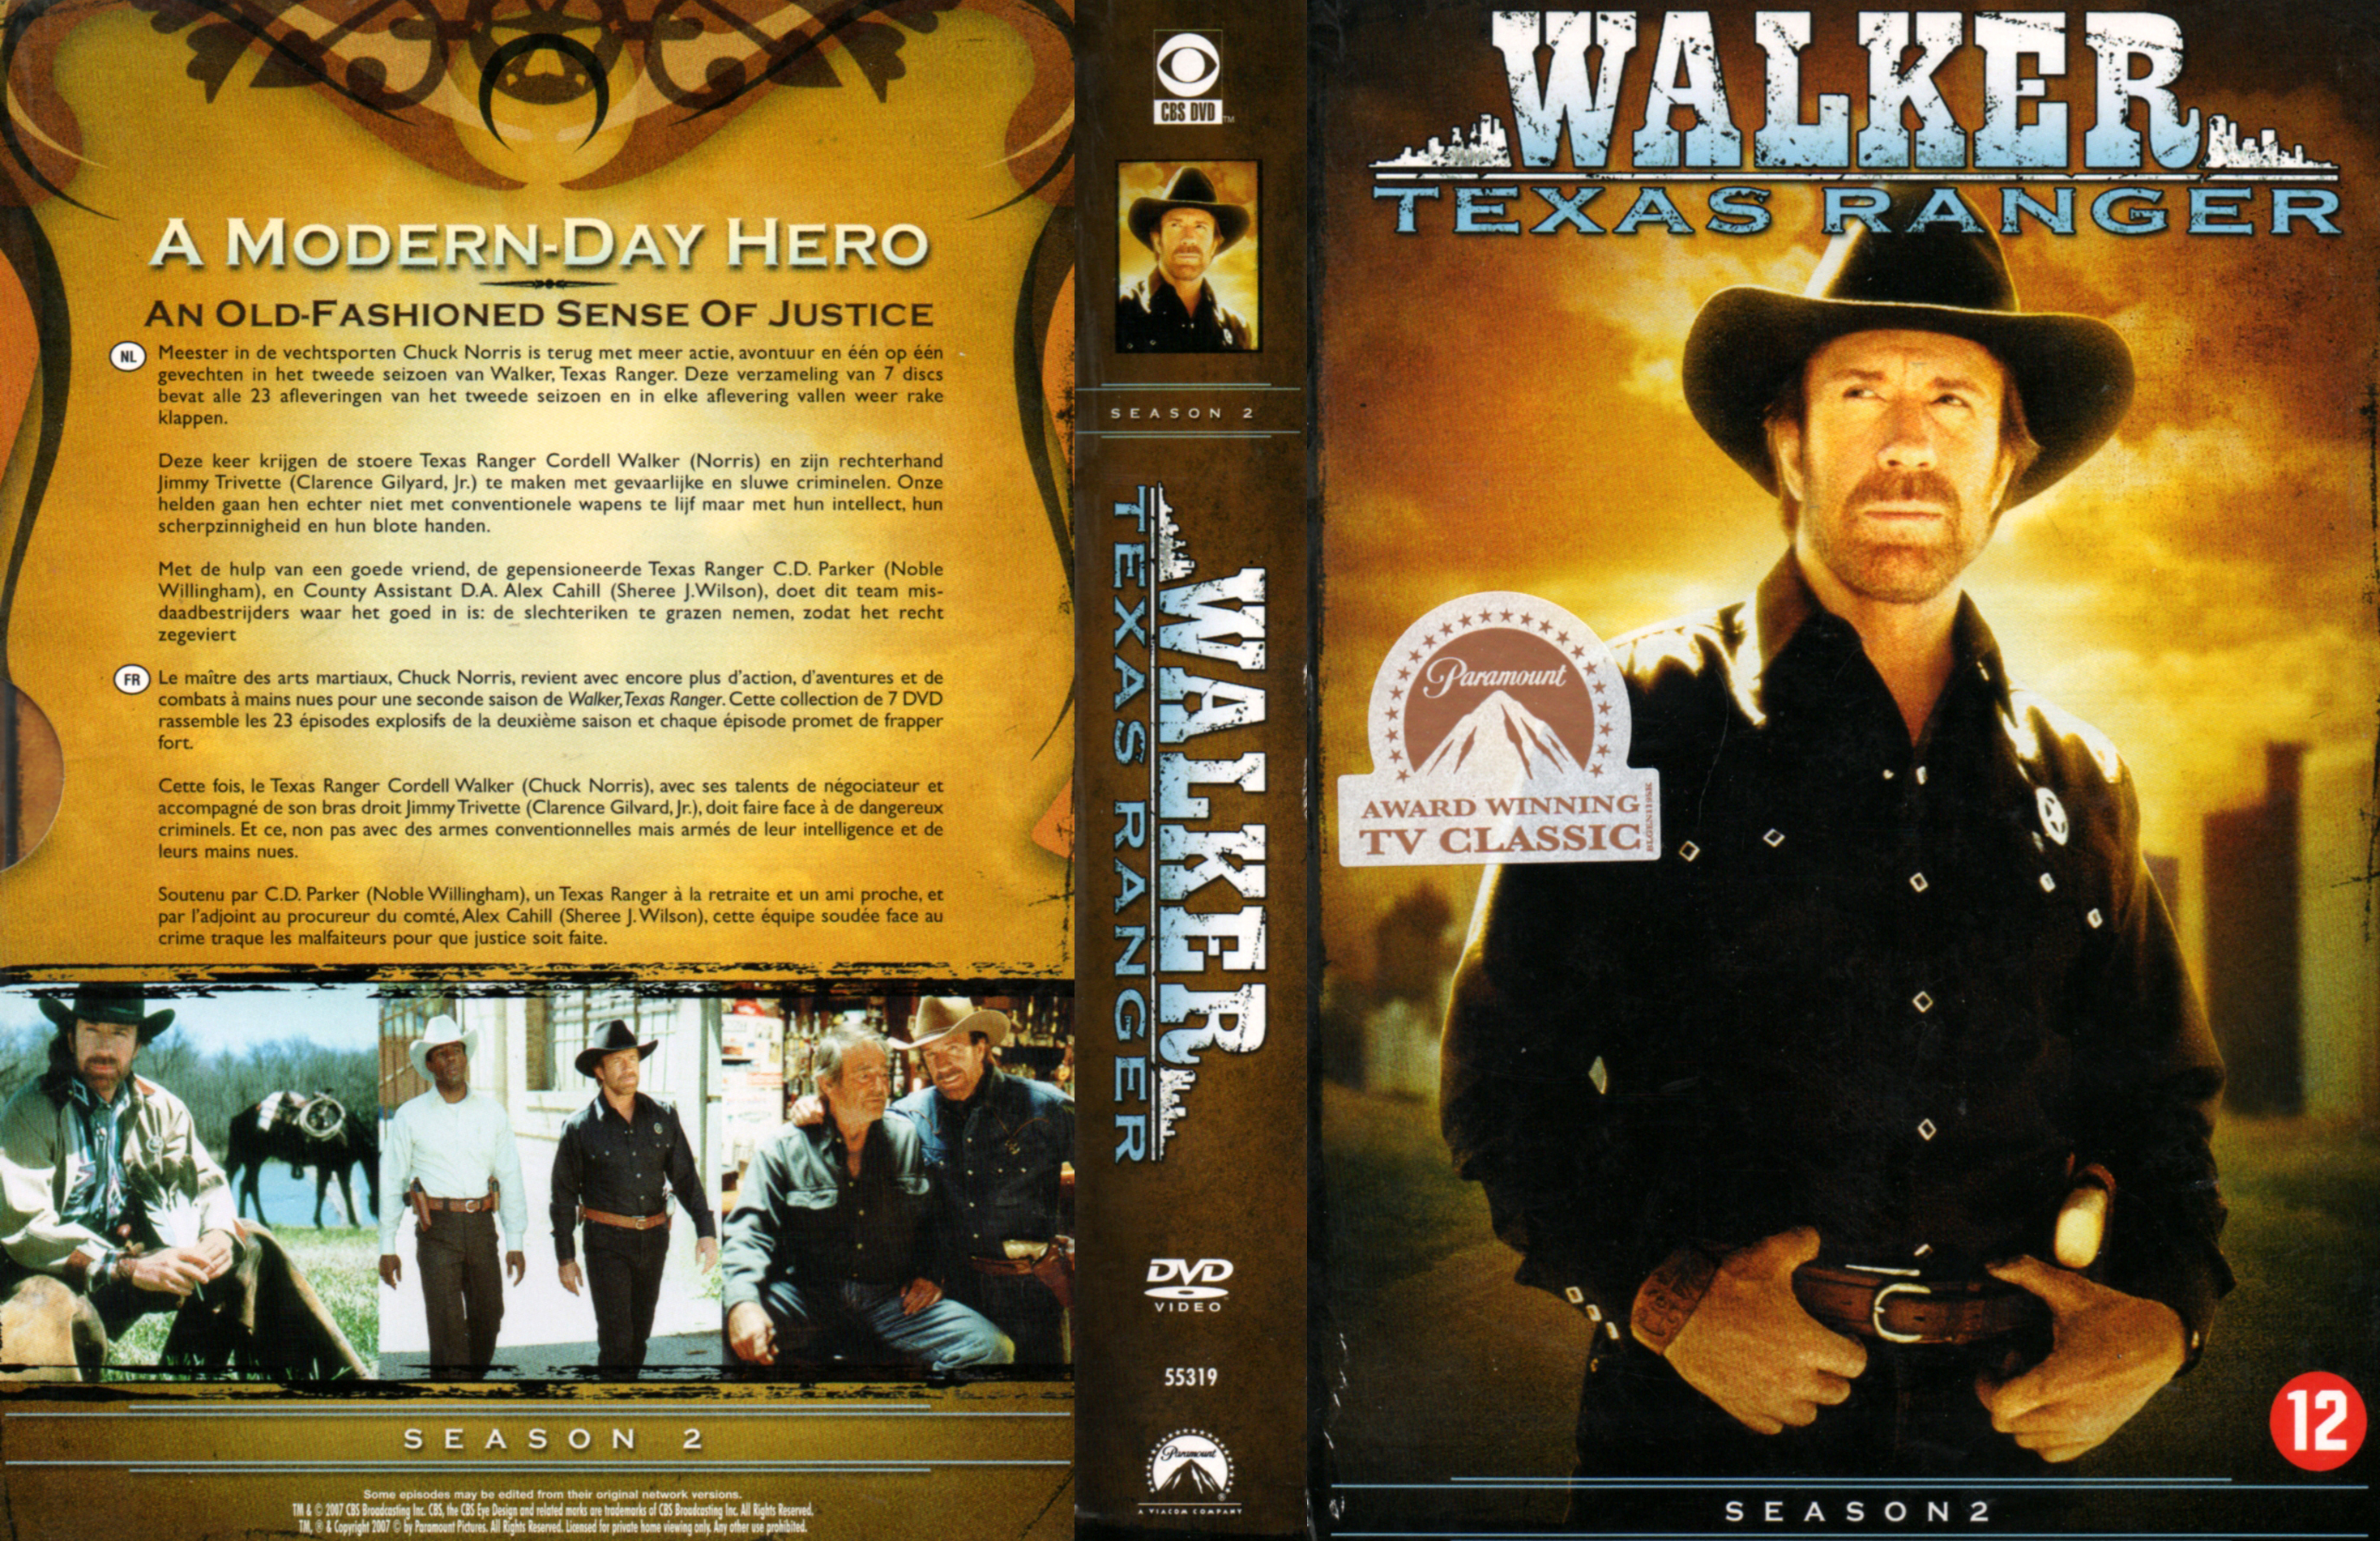 Jaquette DVD Walker Texas Ranger Saison 2 COFFRET